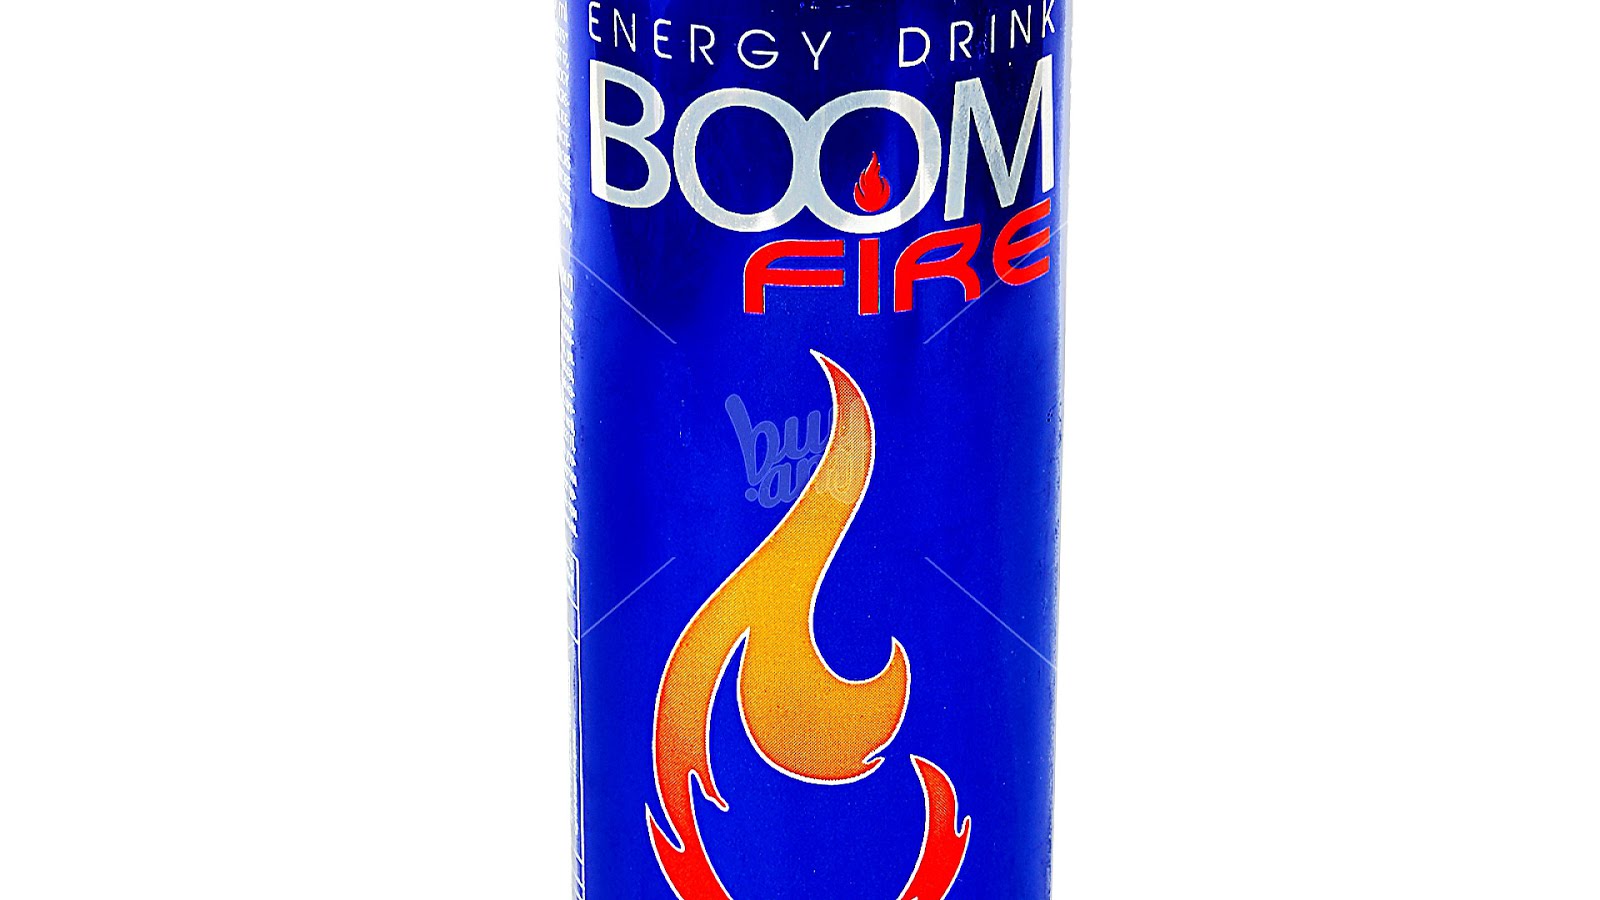 Dafaq boom. Энергетик боом. Boom Fire Энергетик. Бум Бест энергетический напиток. Boom Fire Energy Drink.